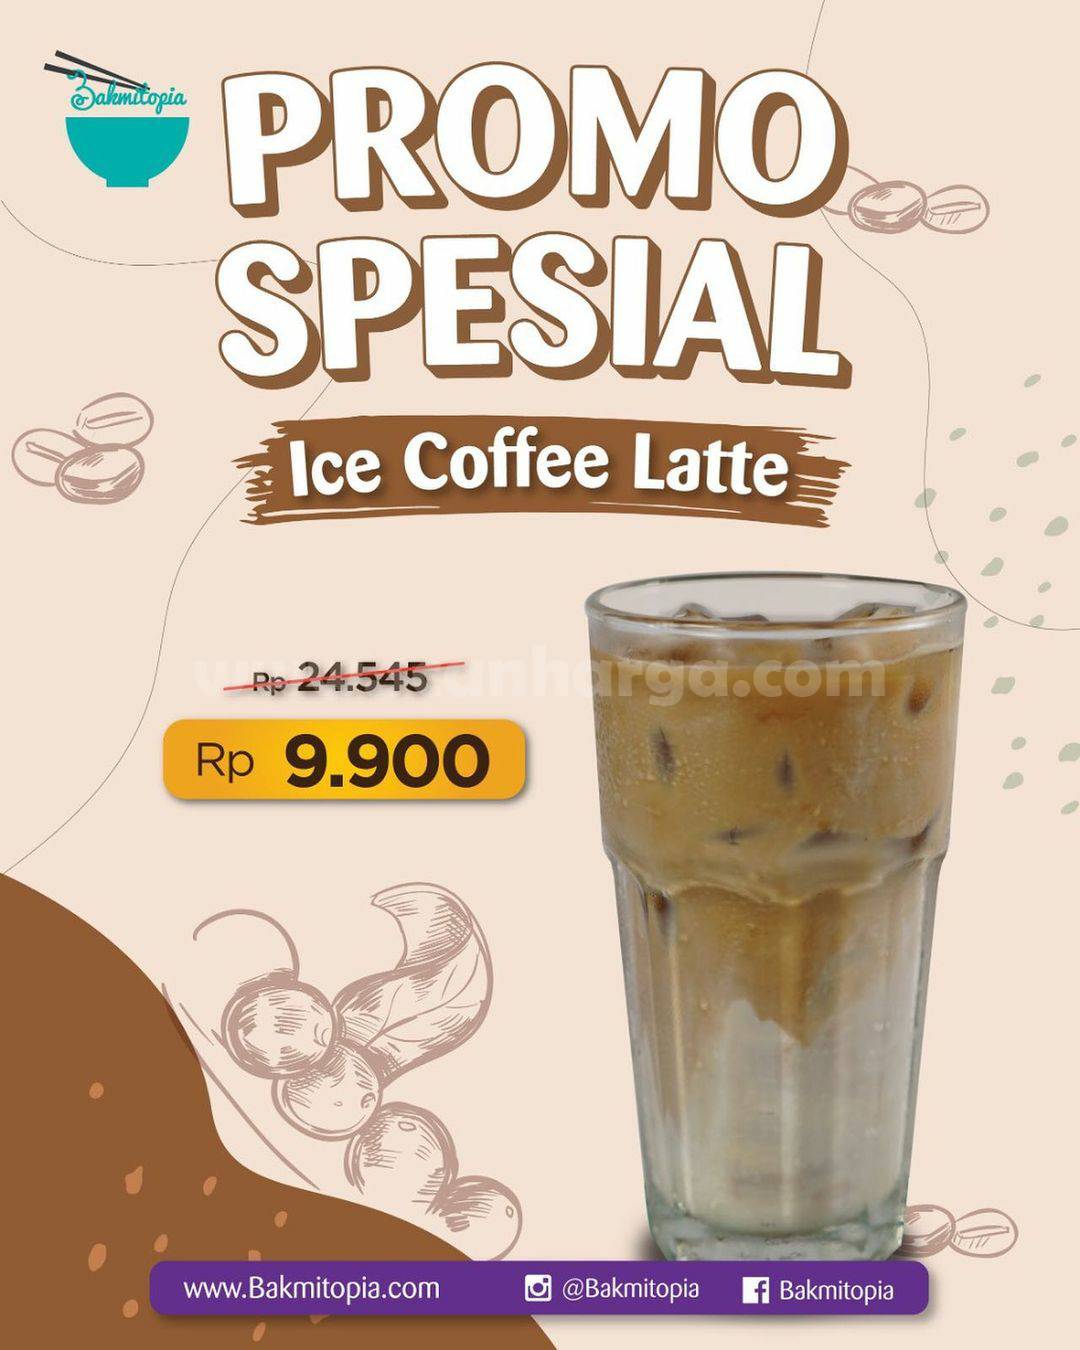 Bakmitopia Promo Spesial Ice Coffee Latte harga hanya Rp 9.900